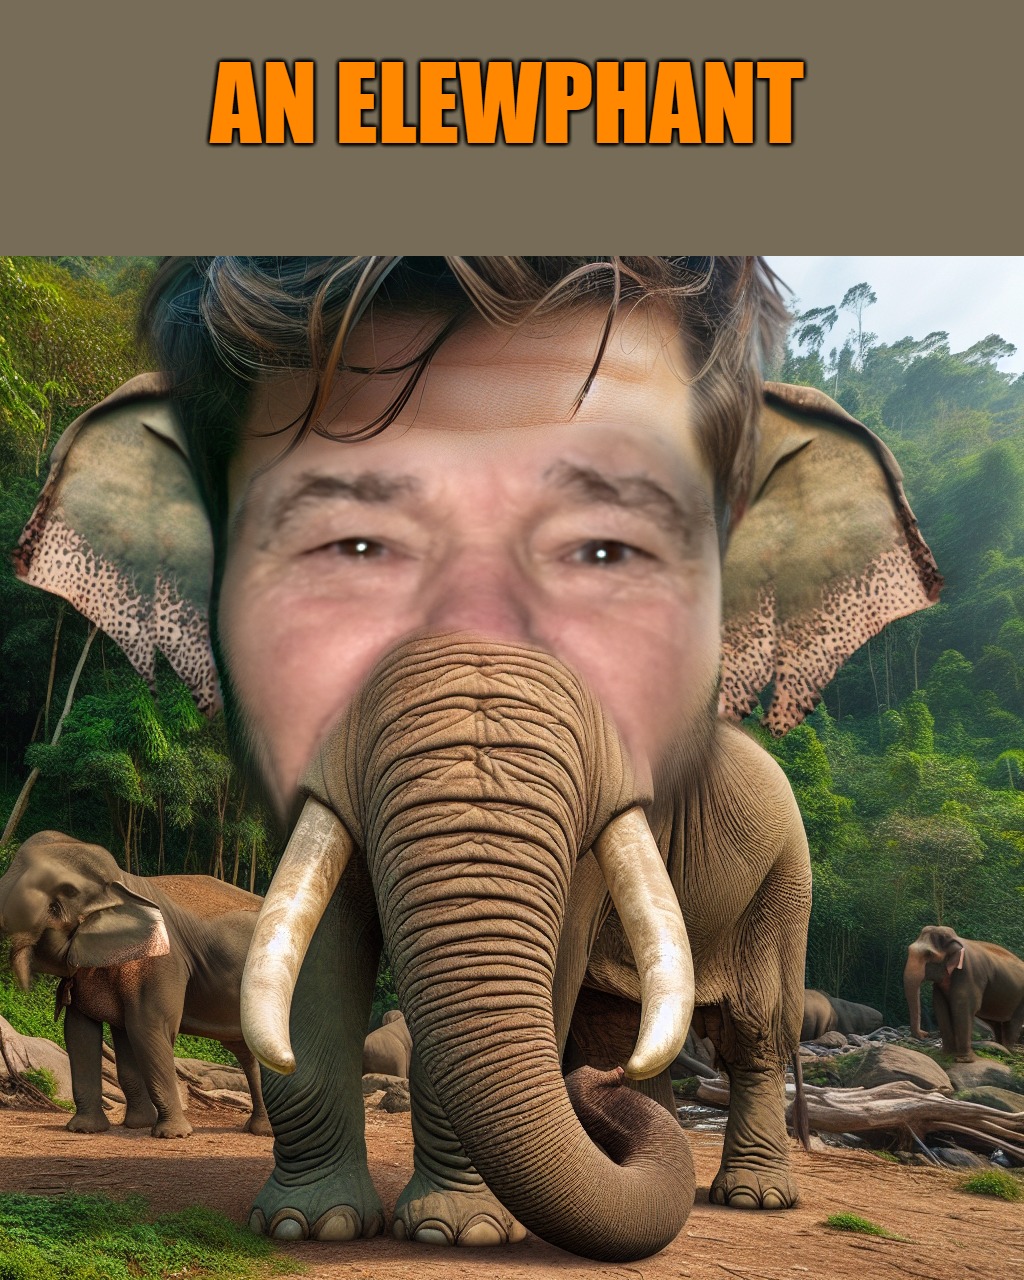 elewphant | AN ELEWPHANT | made w/ Imgflip meme maker